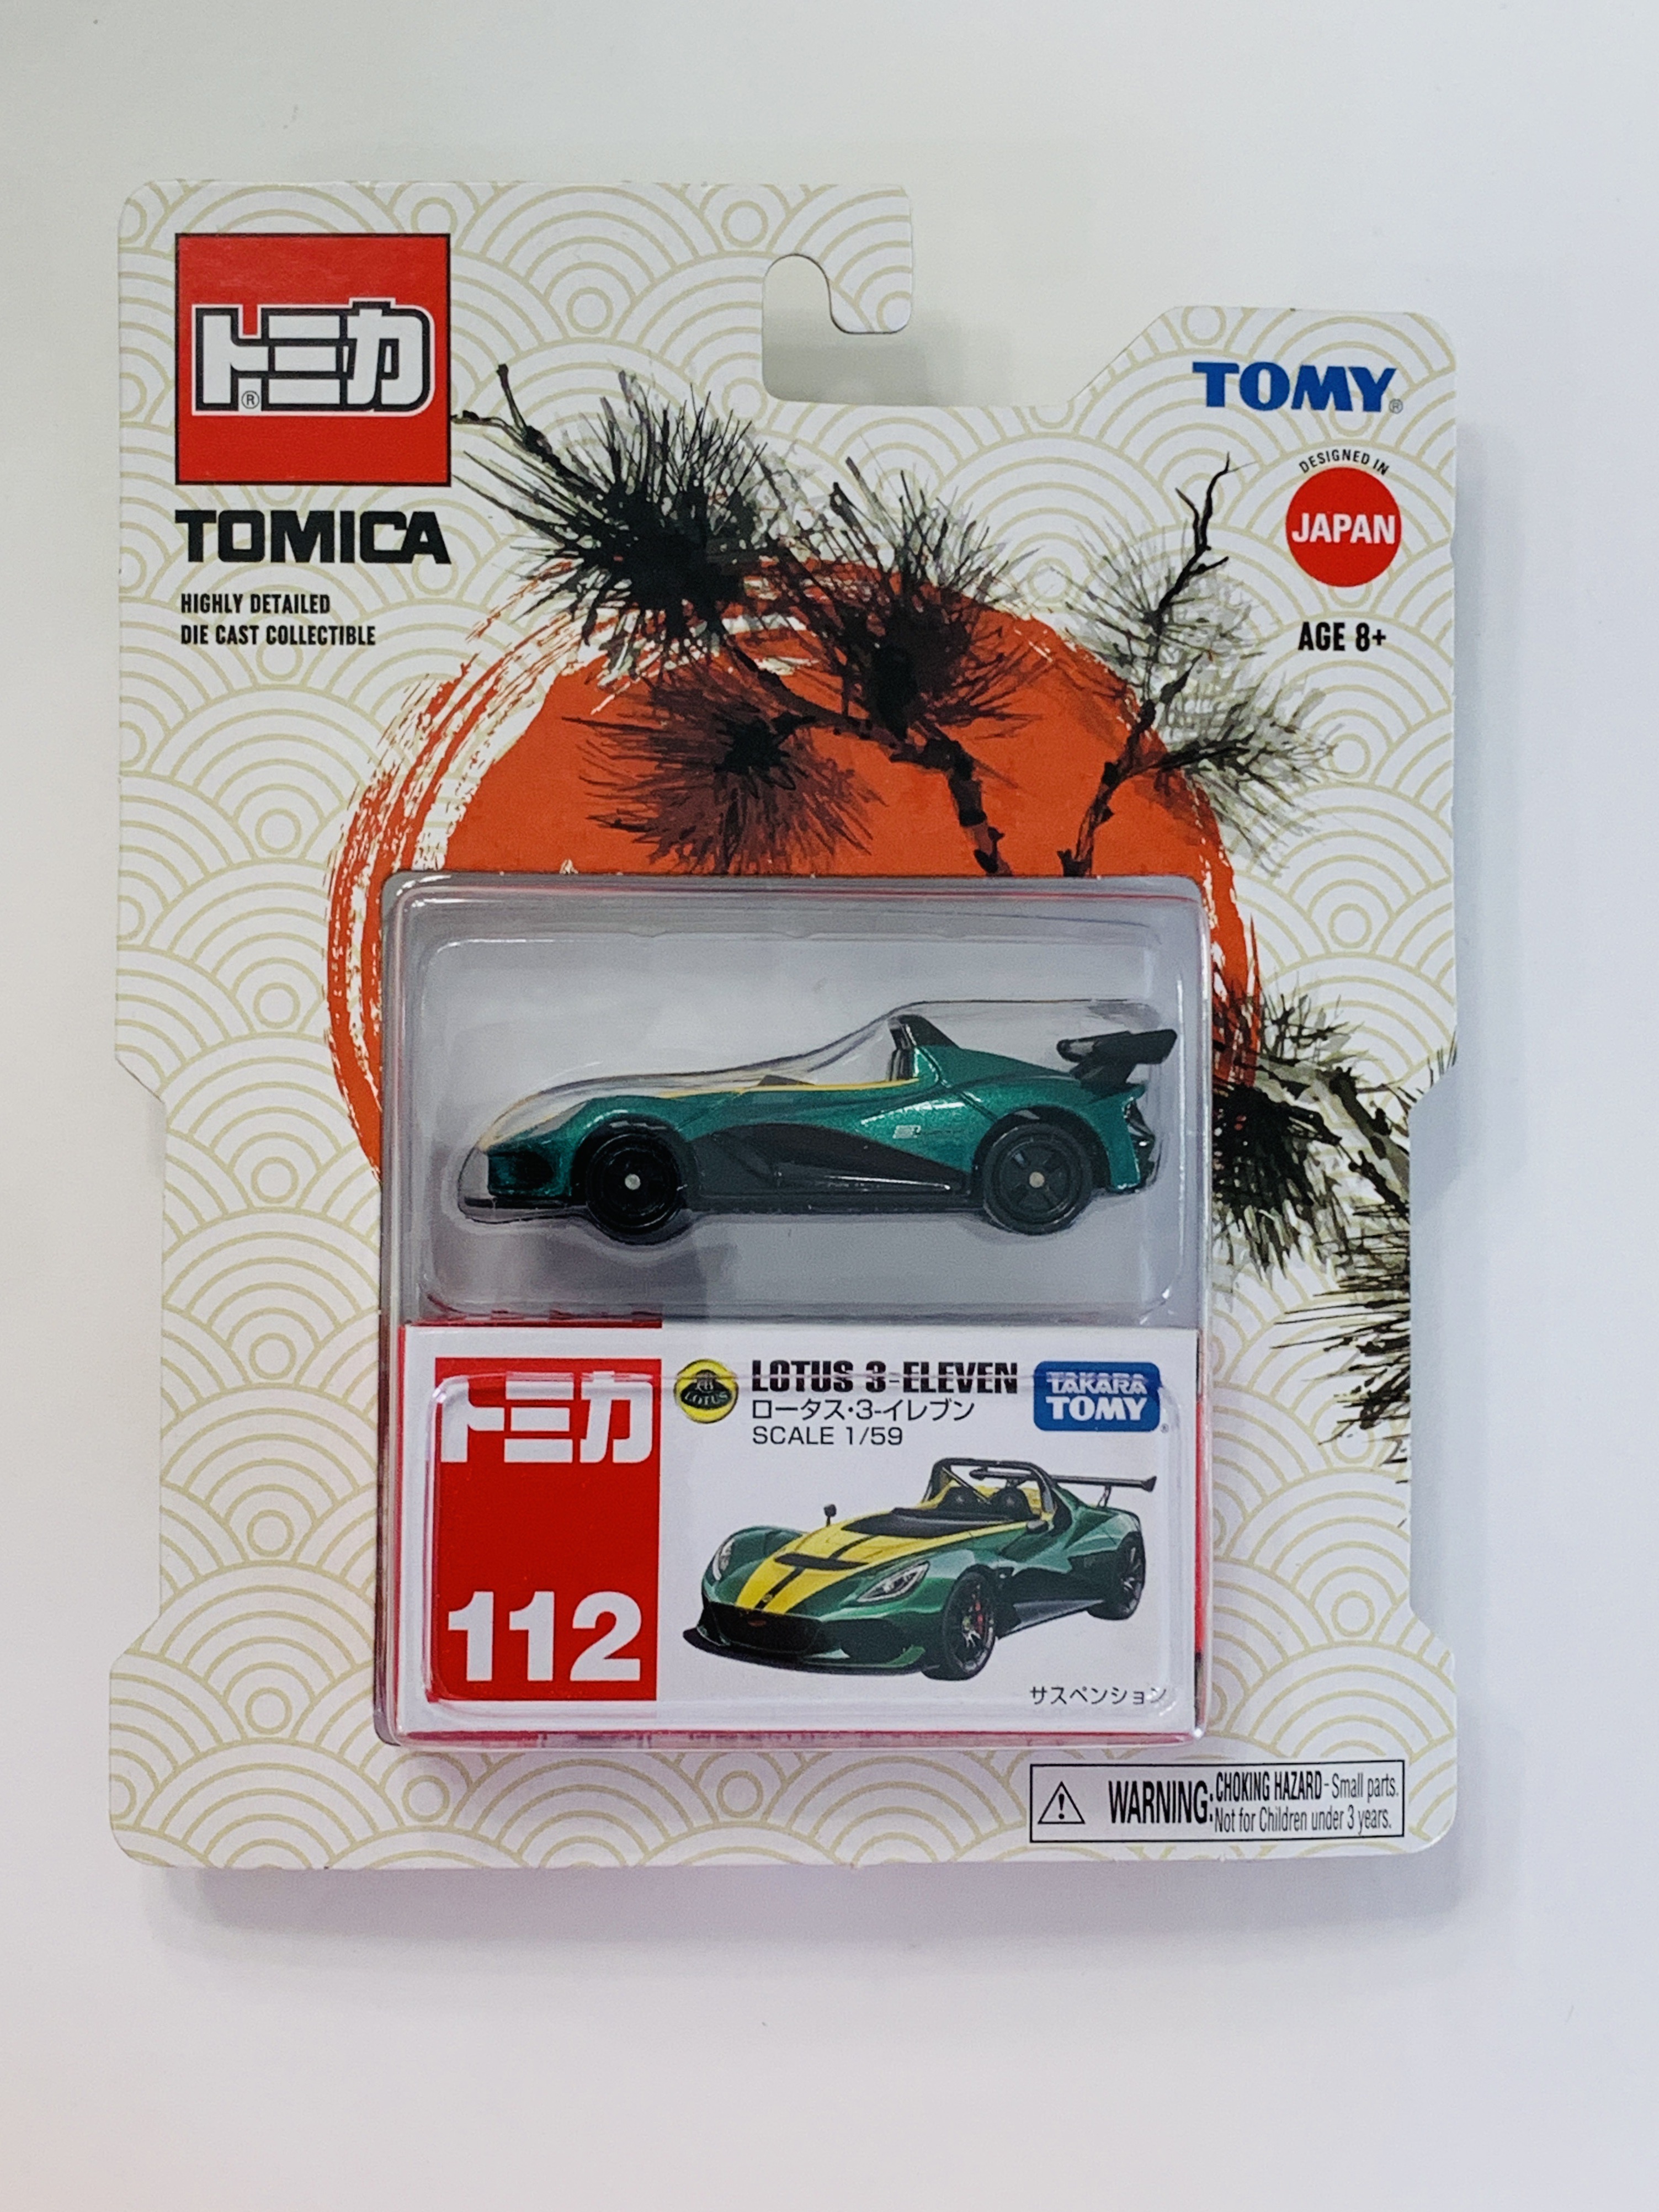 Tomica Lotus 3-Eleven